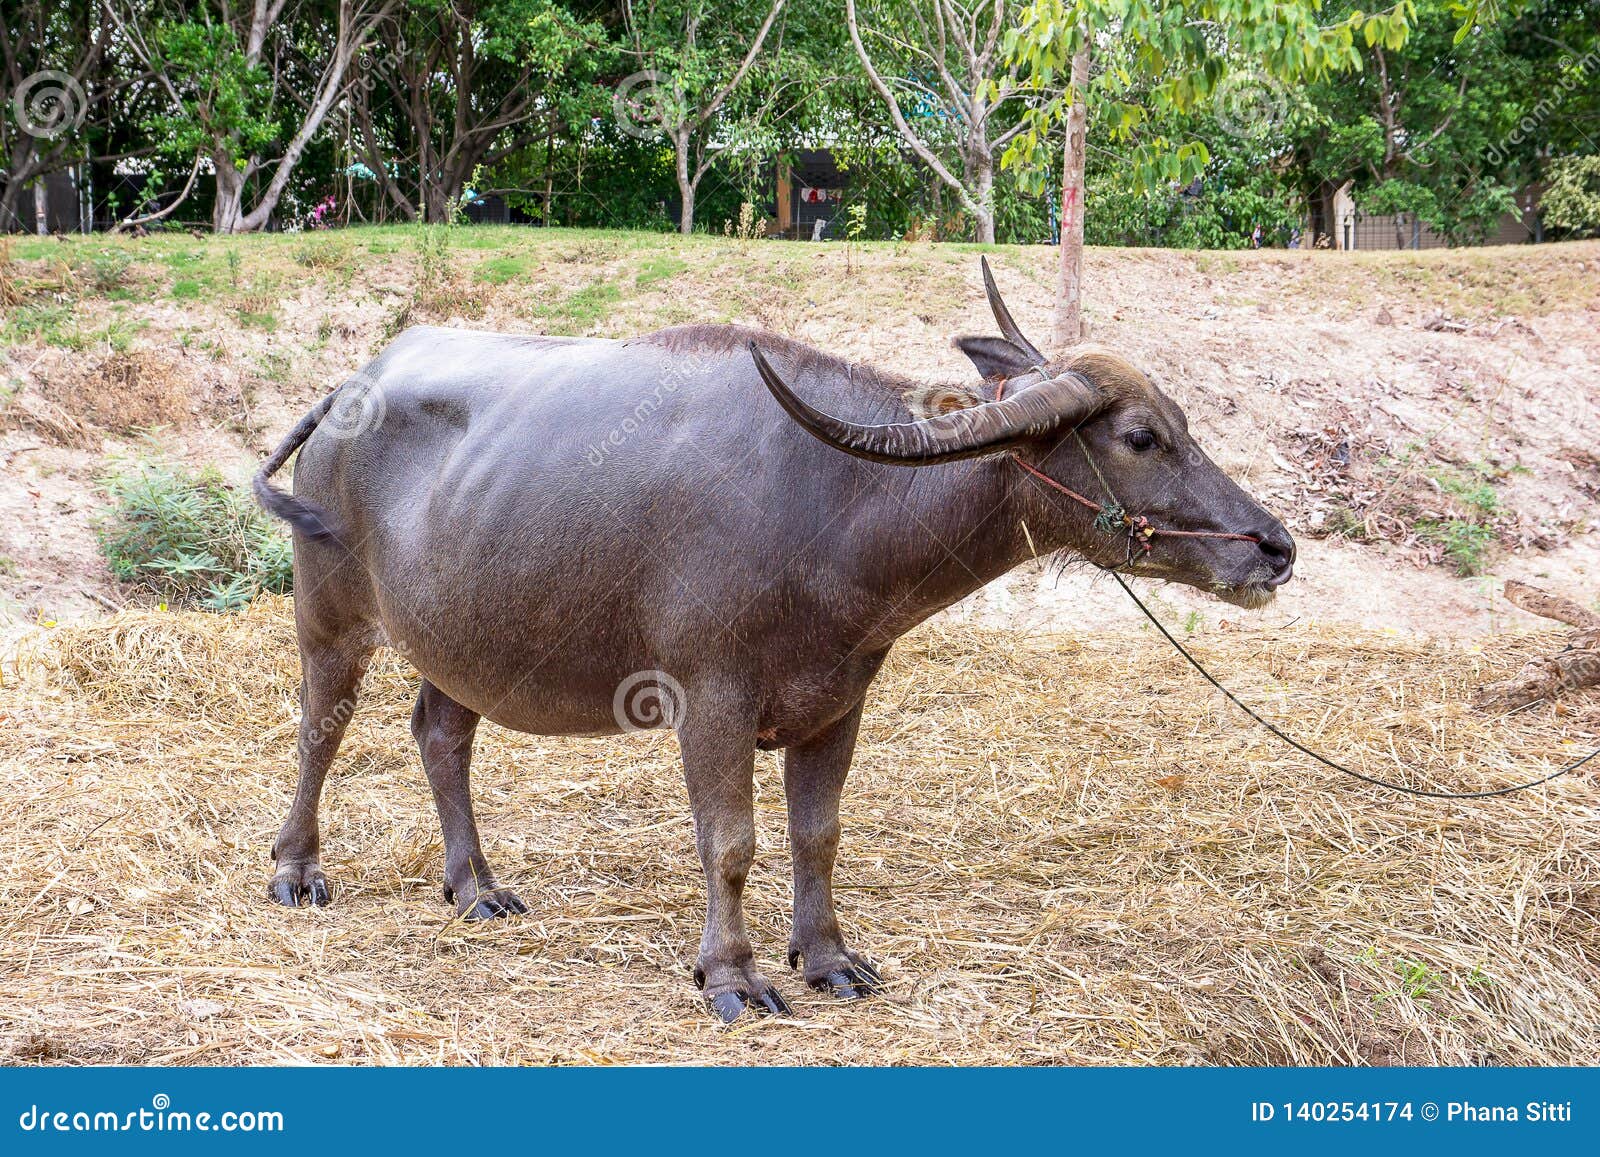 Big Thai Buffalo Long Horns, Water Buffalo, Thailand Stock Photo - Image of horns, grass: 140254174